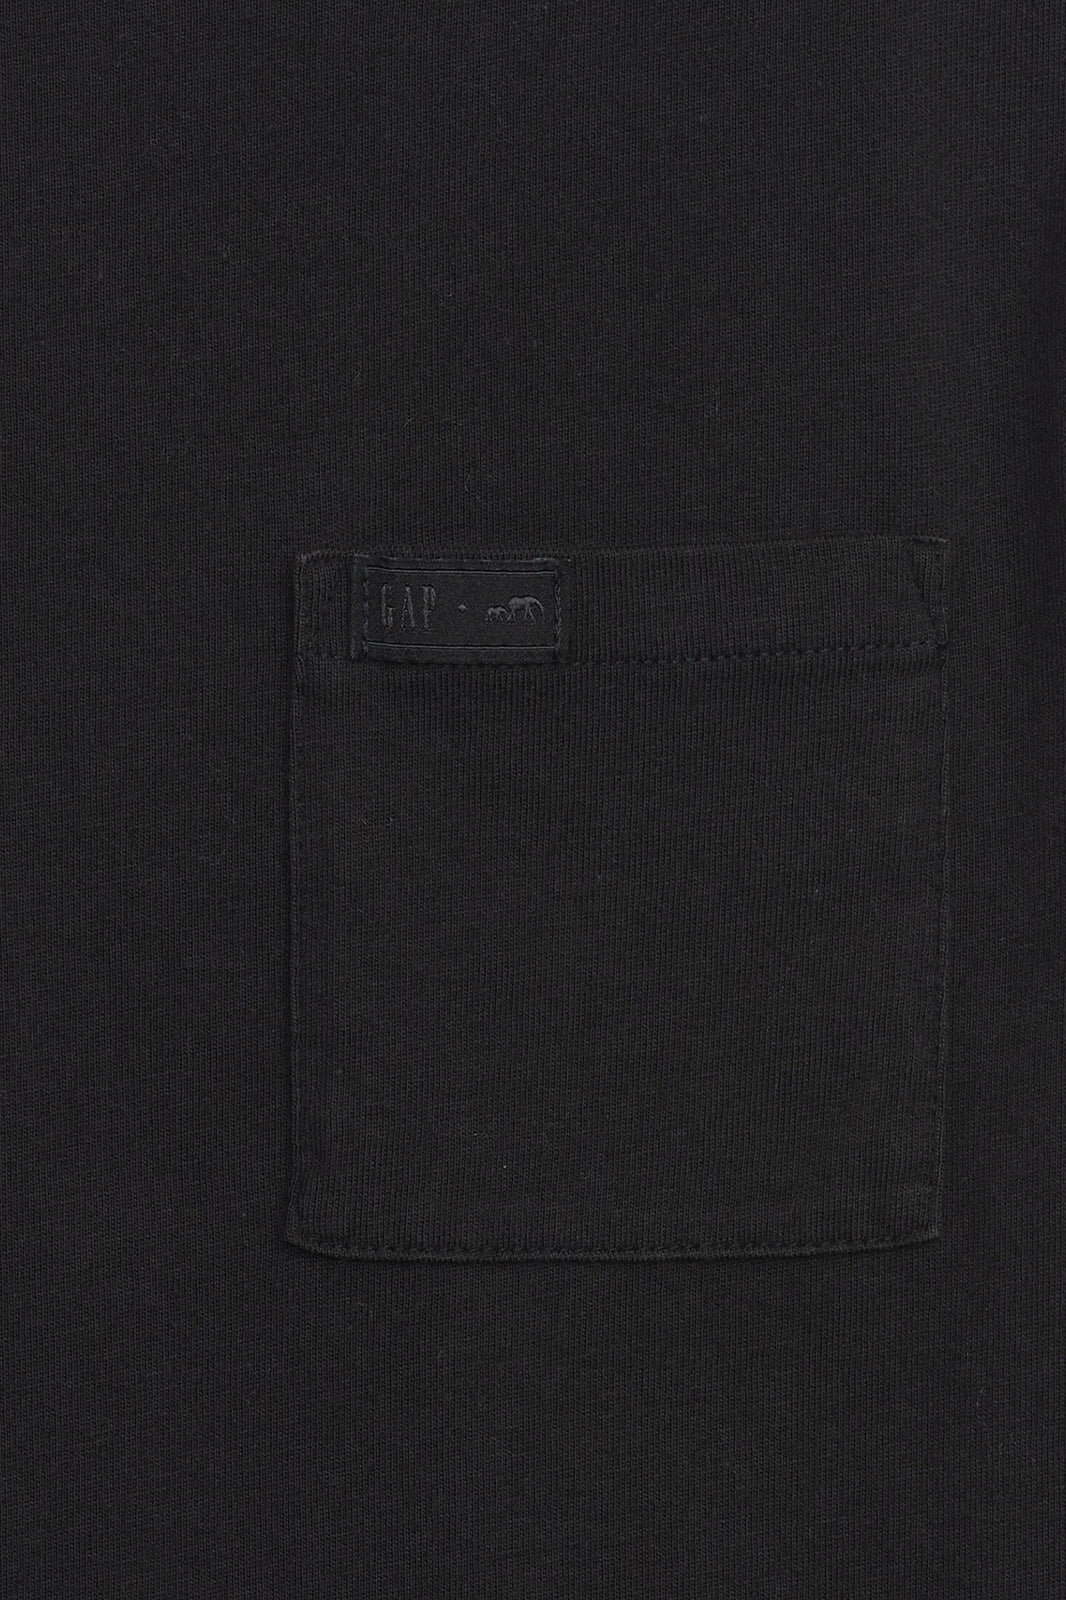 Adult Gap x BKc Pocket T-Shirt (Black)